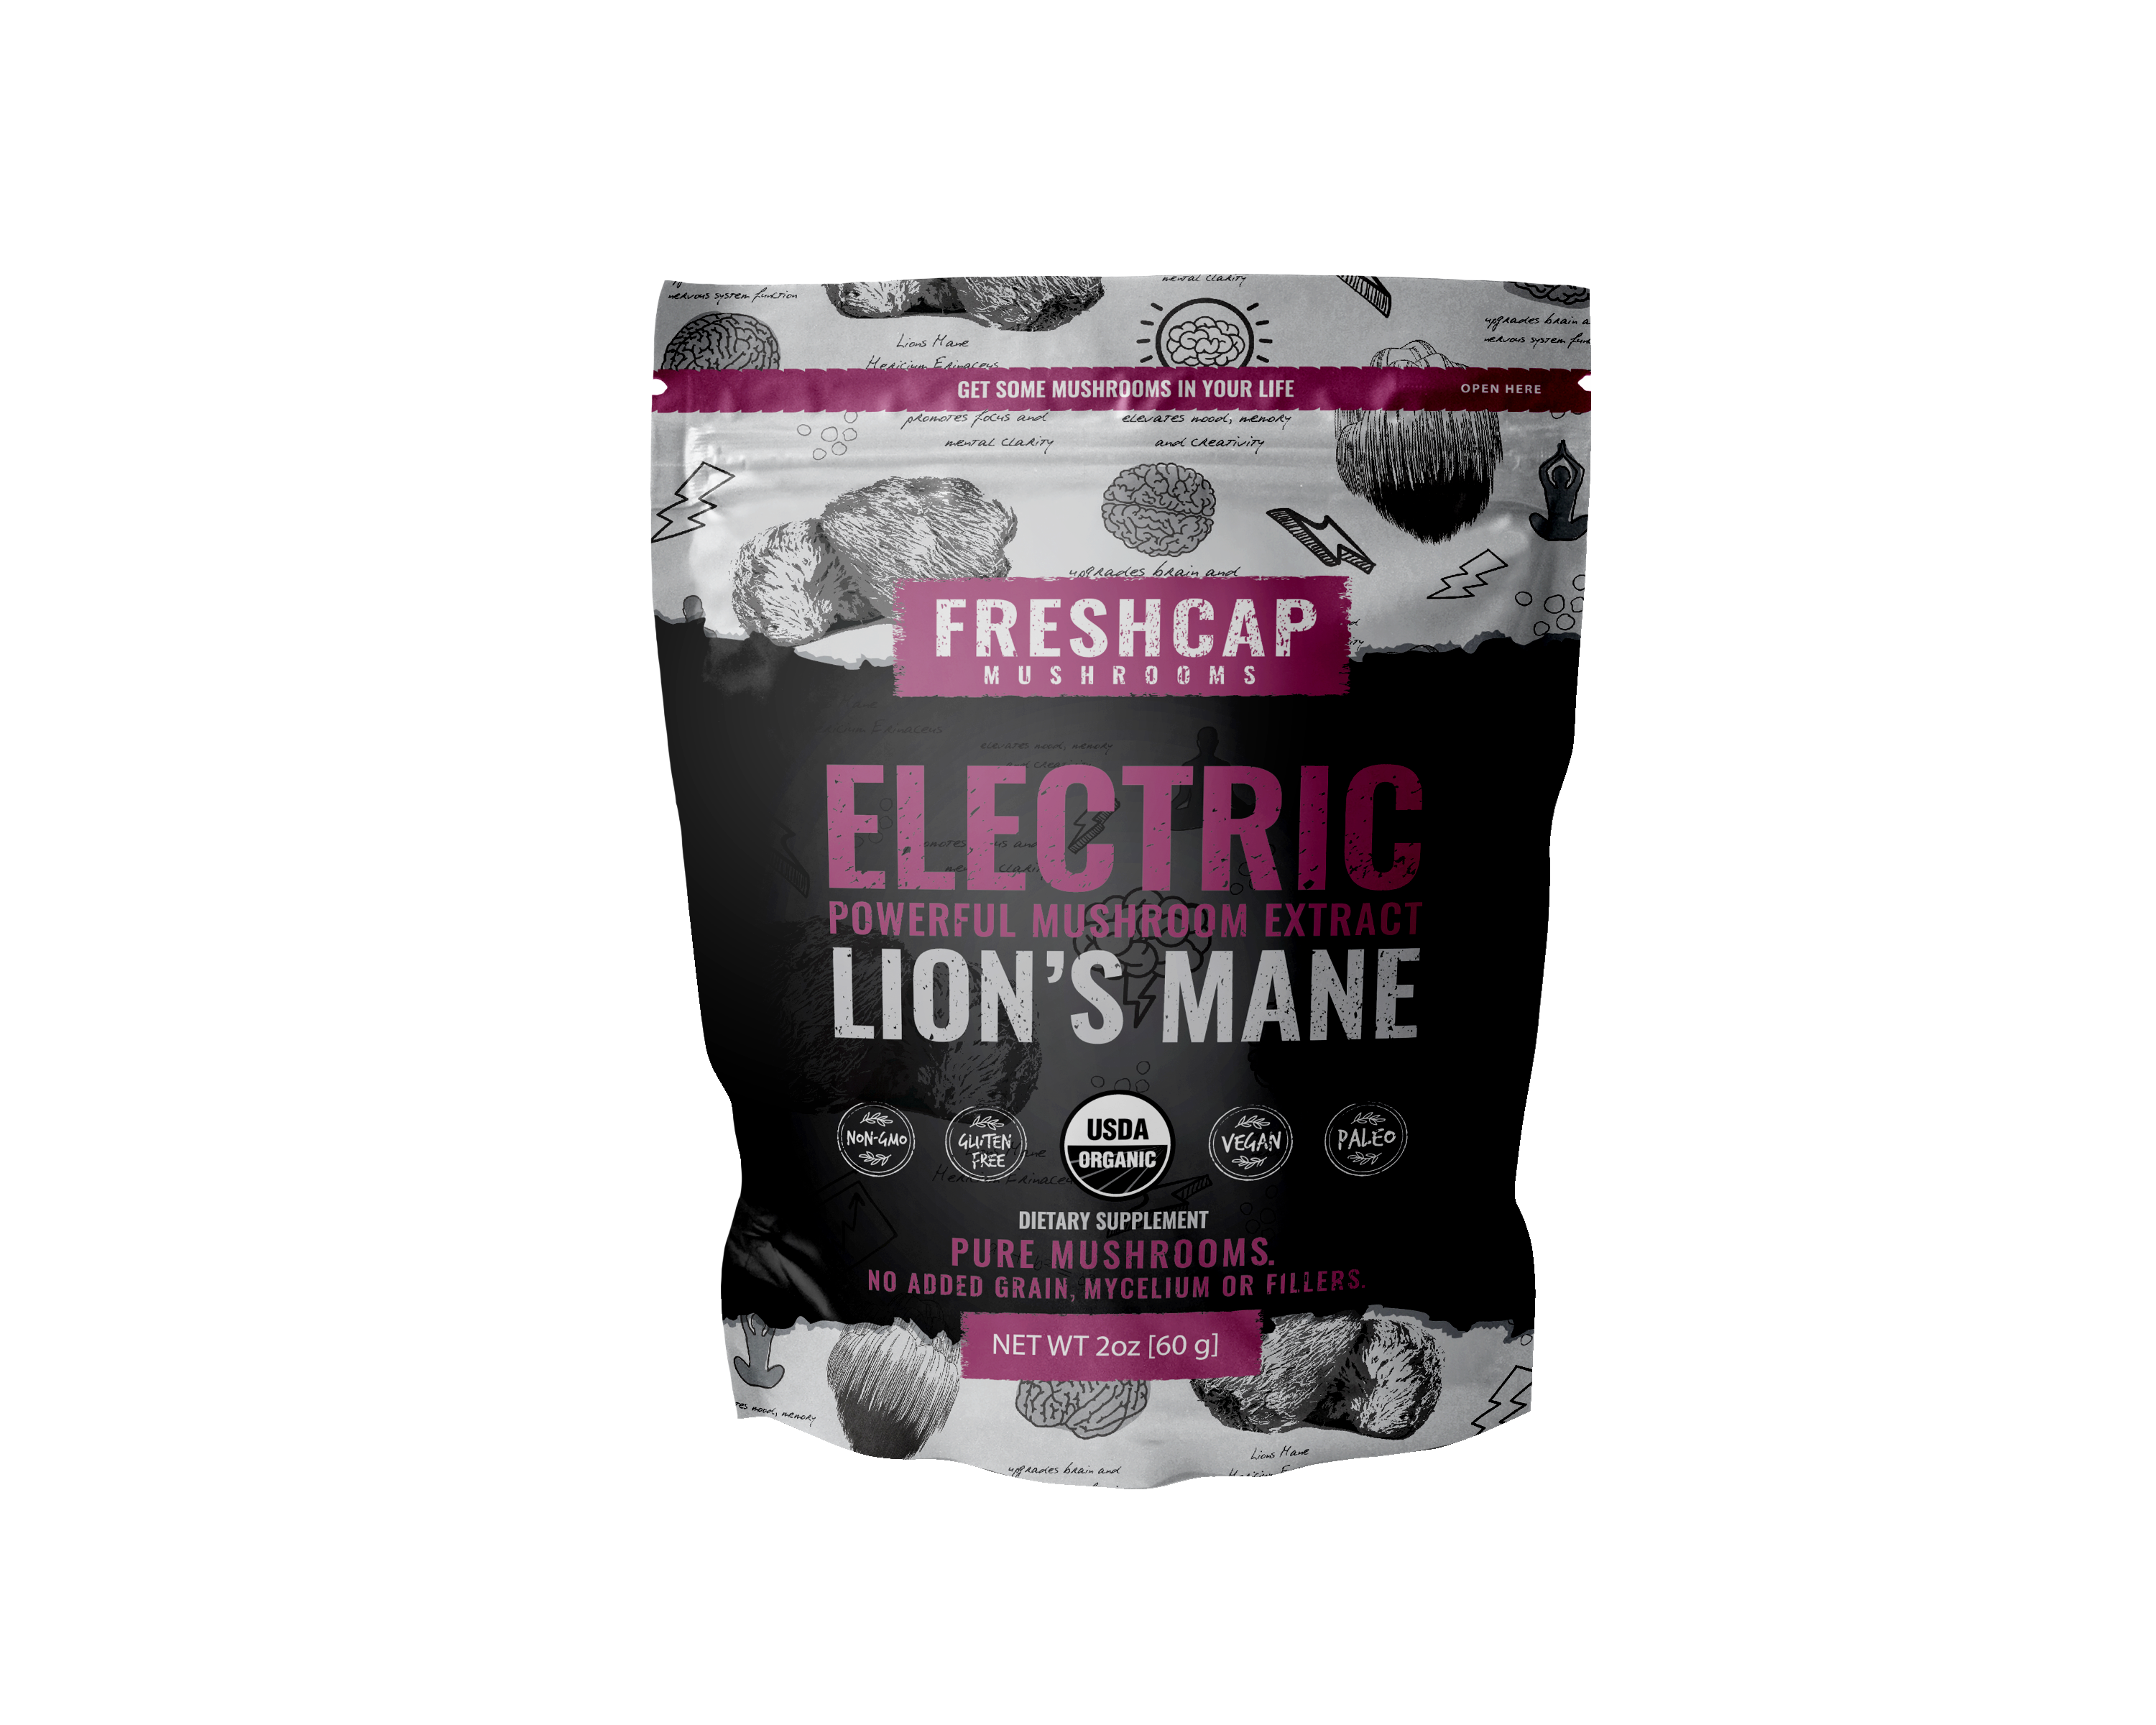 Electric Lion's Mane Powerful Mushroom Extract Powder